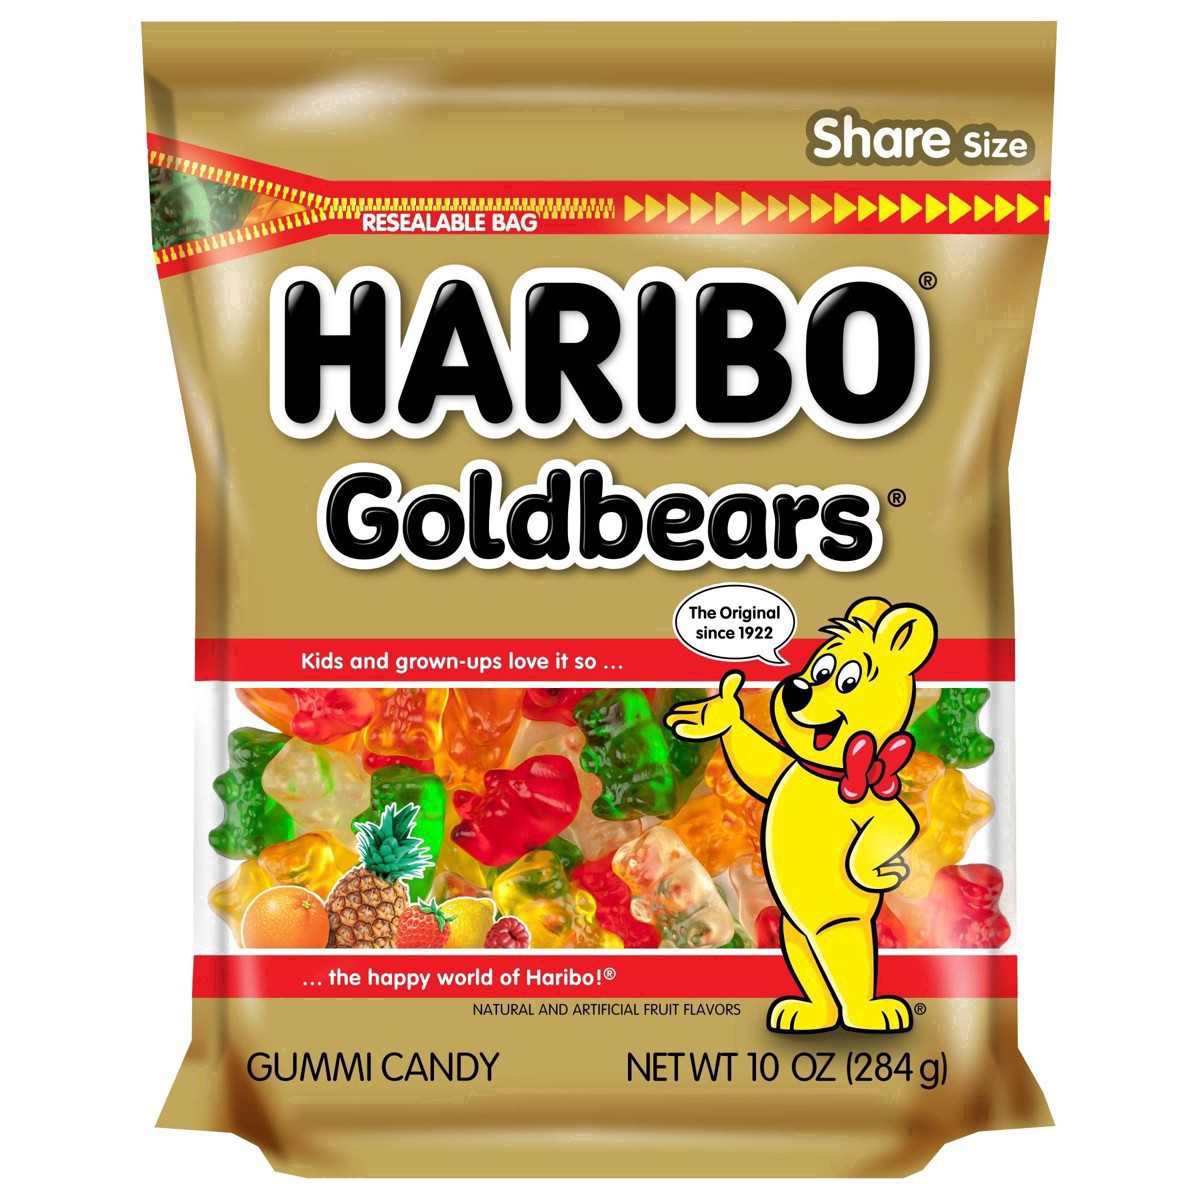 slide 3 of 22, Haribo Share Size Goldbears Gummi Candy 10 oz, 10 oz